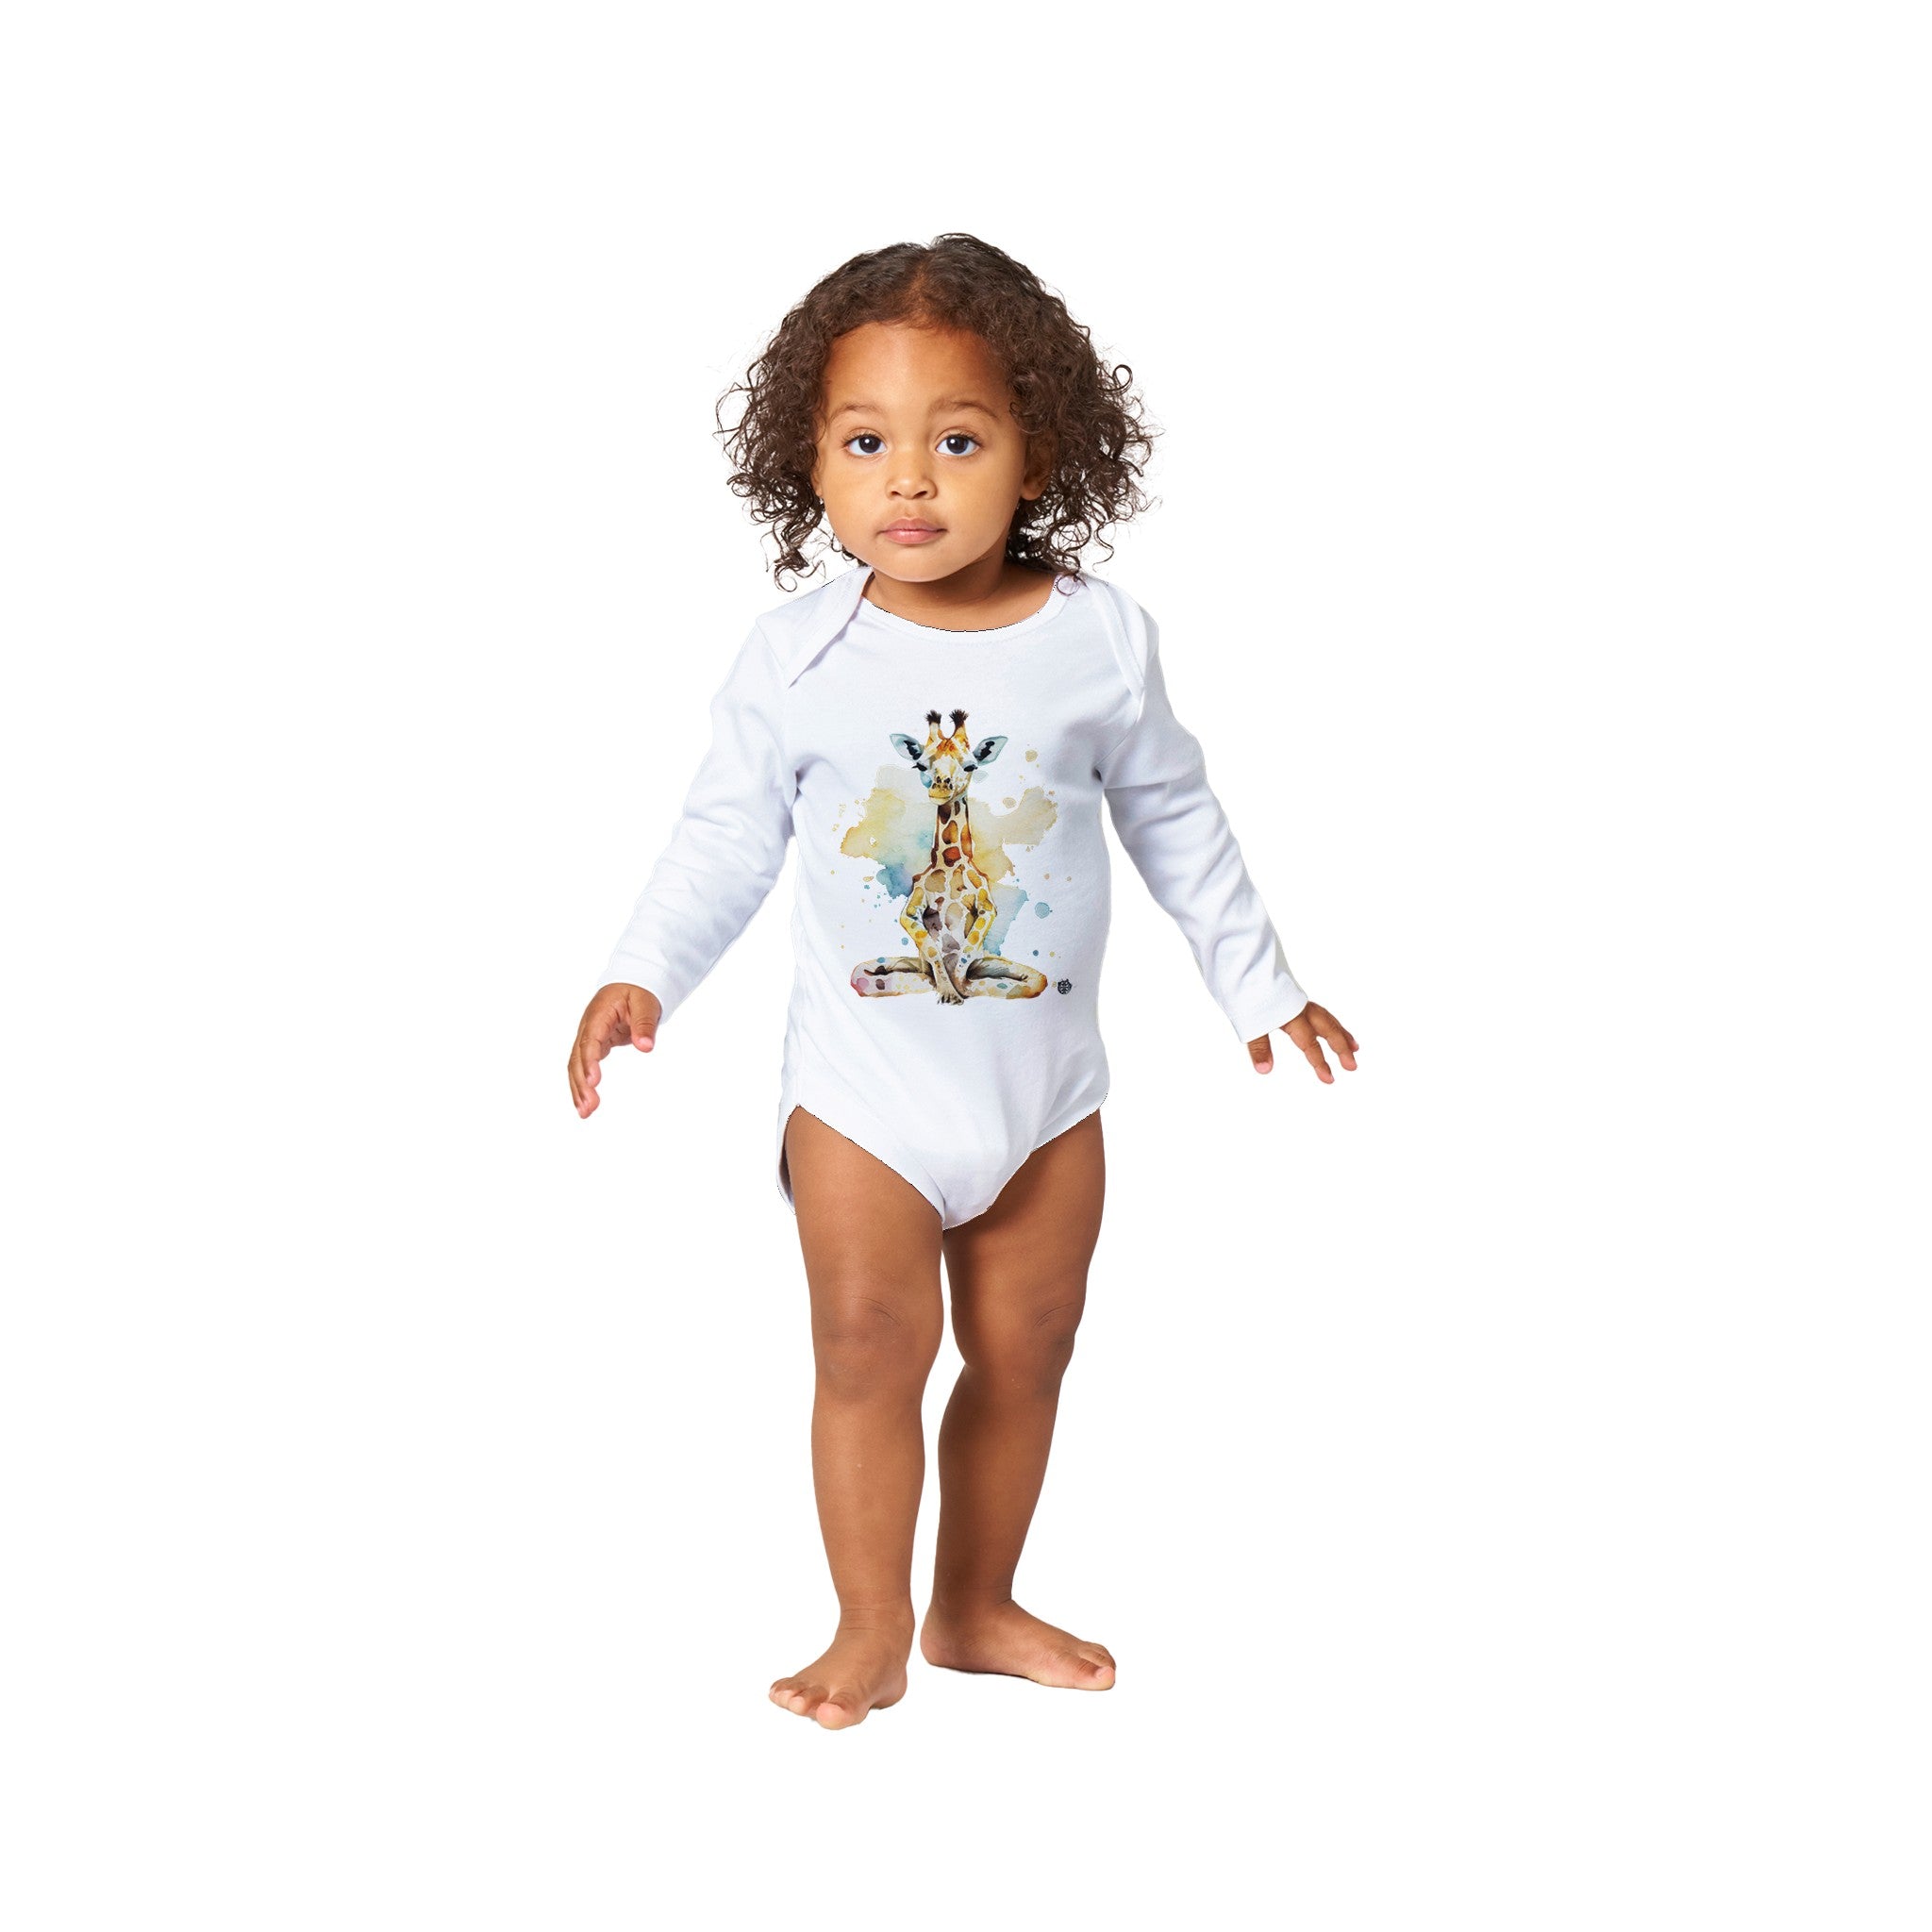 Charming Choices: Long-Sleeved Baby Romper Suit - Yoga Giraffe, SenPets Original